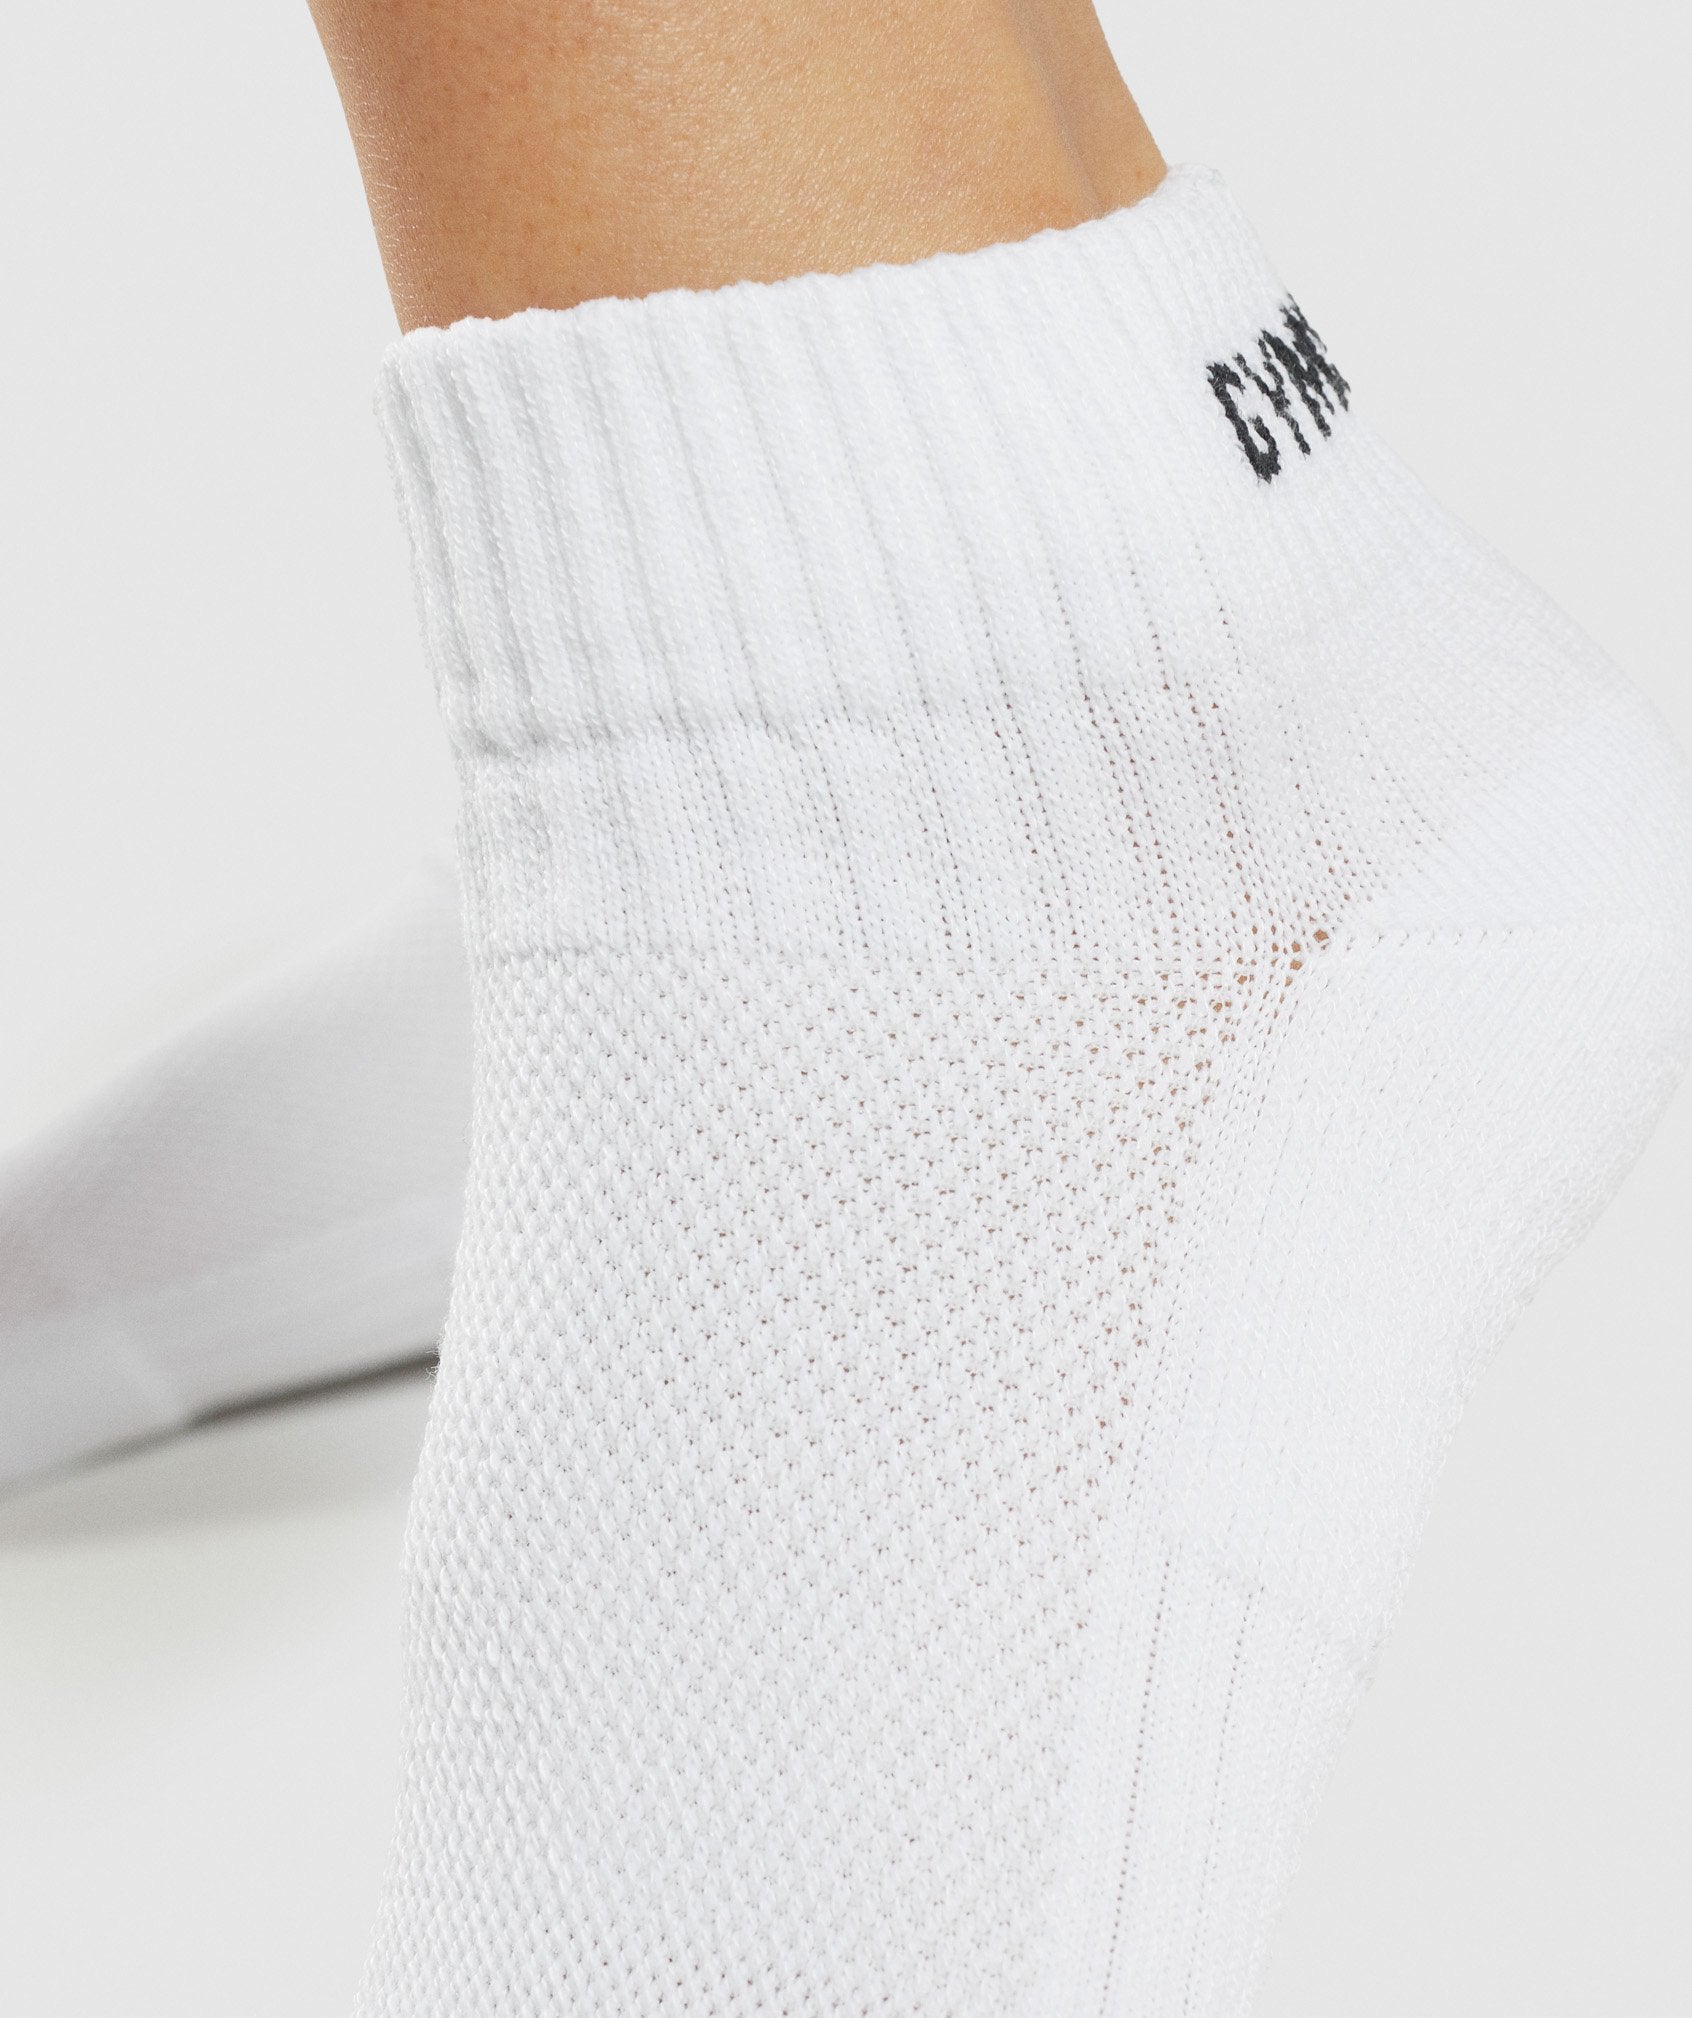 Gymshark Premium Jacquard Single Socks - Black/White